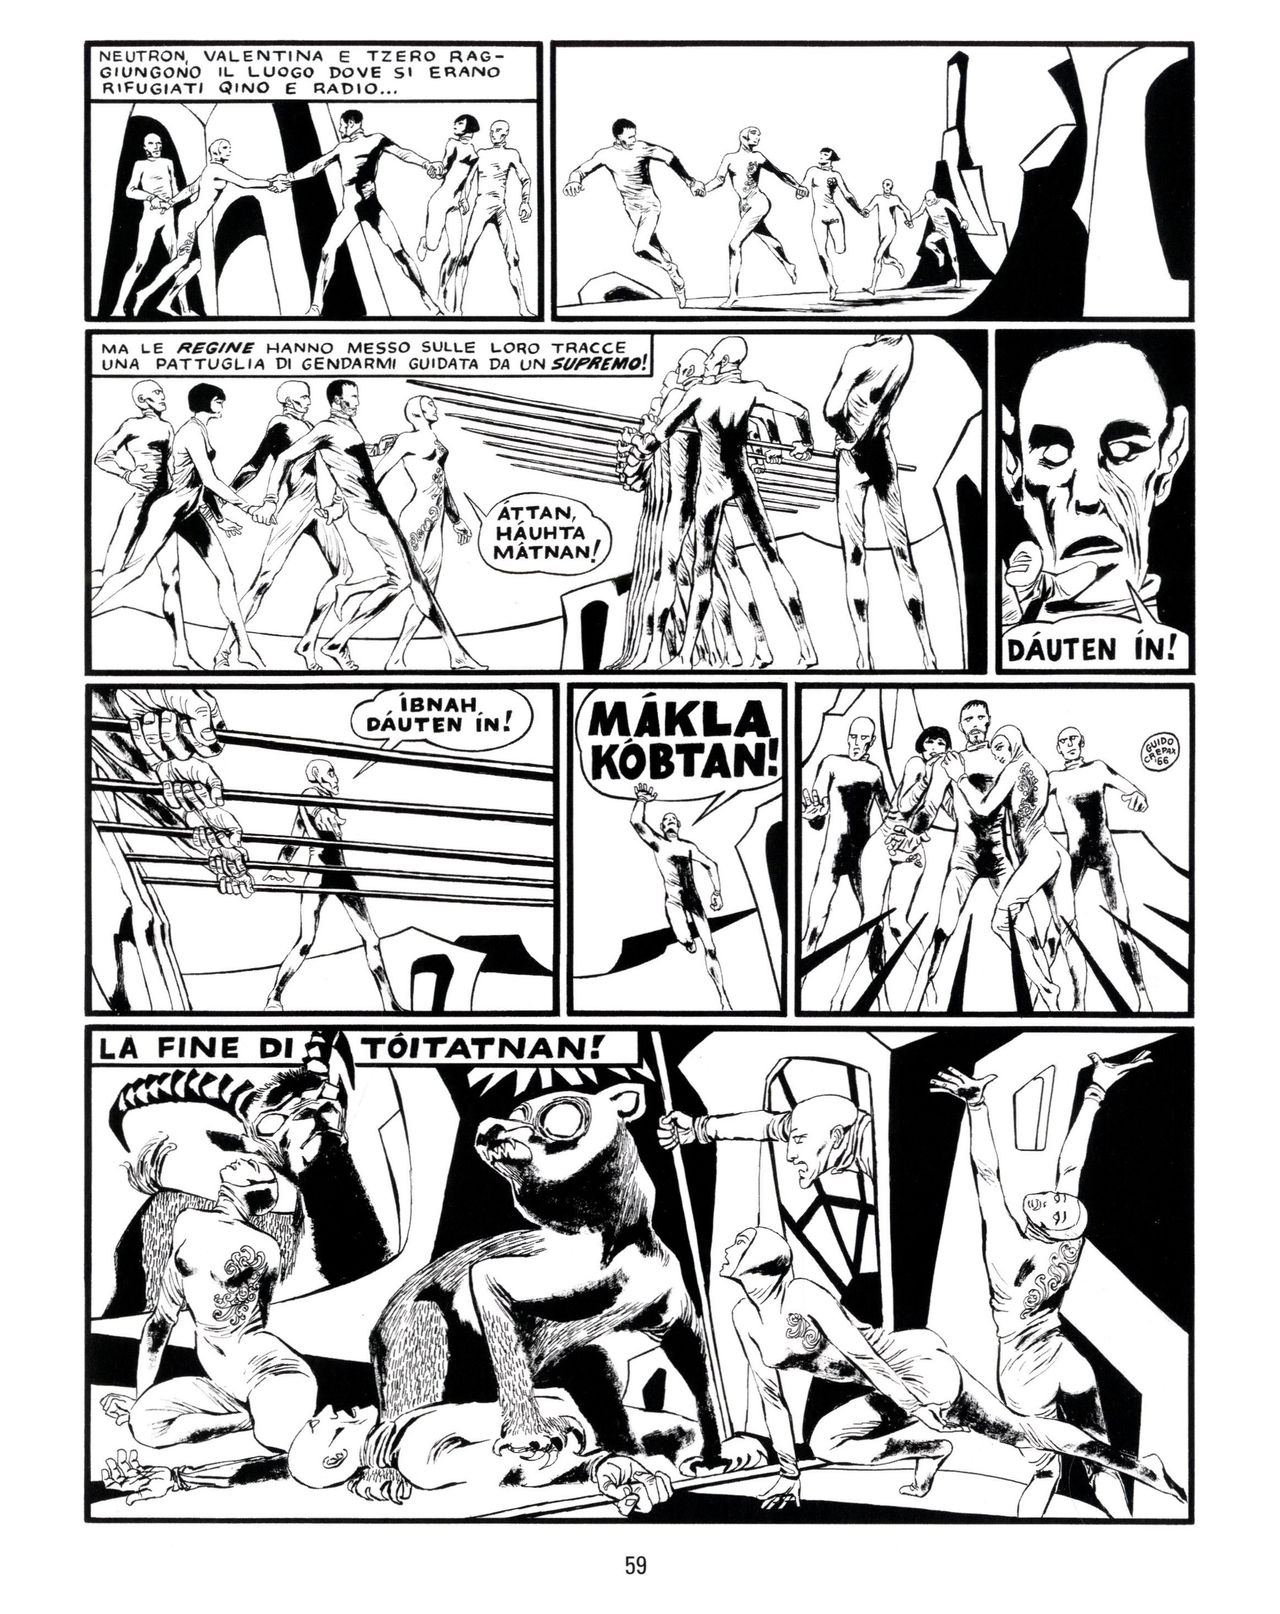 [Guido Crepax] Erotica Fumetti #25 : L'ascesa dei sotterranei : I cavalieri ciechi [Italian] 60